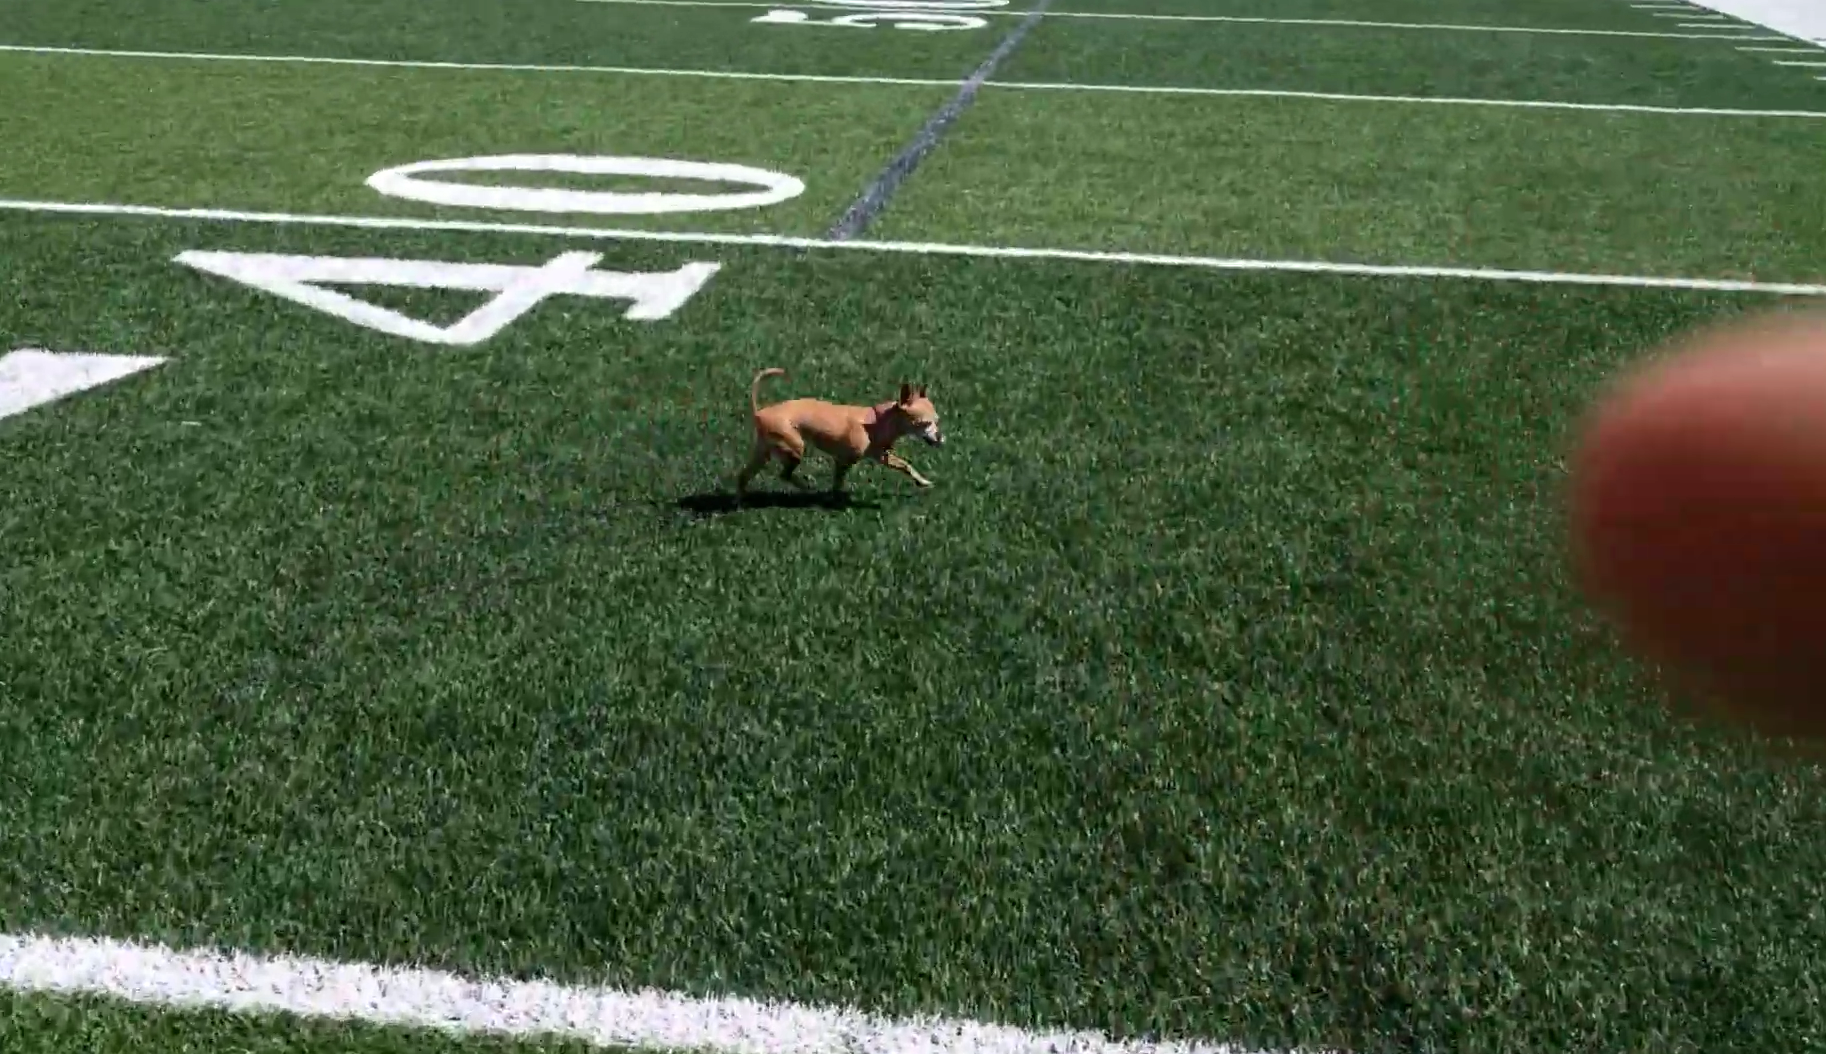 How fast can a Chihuahua run?